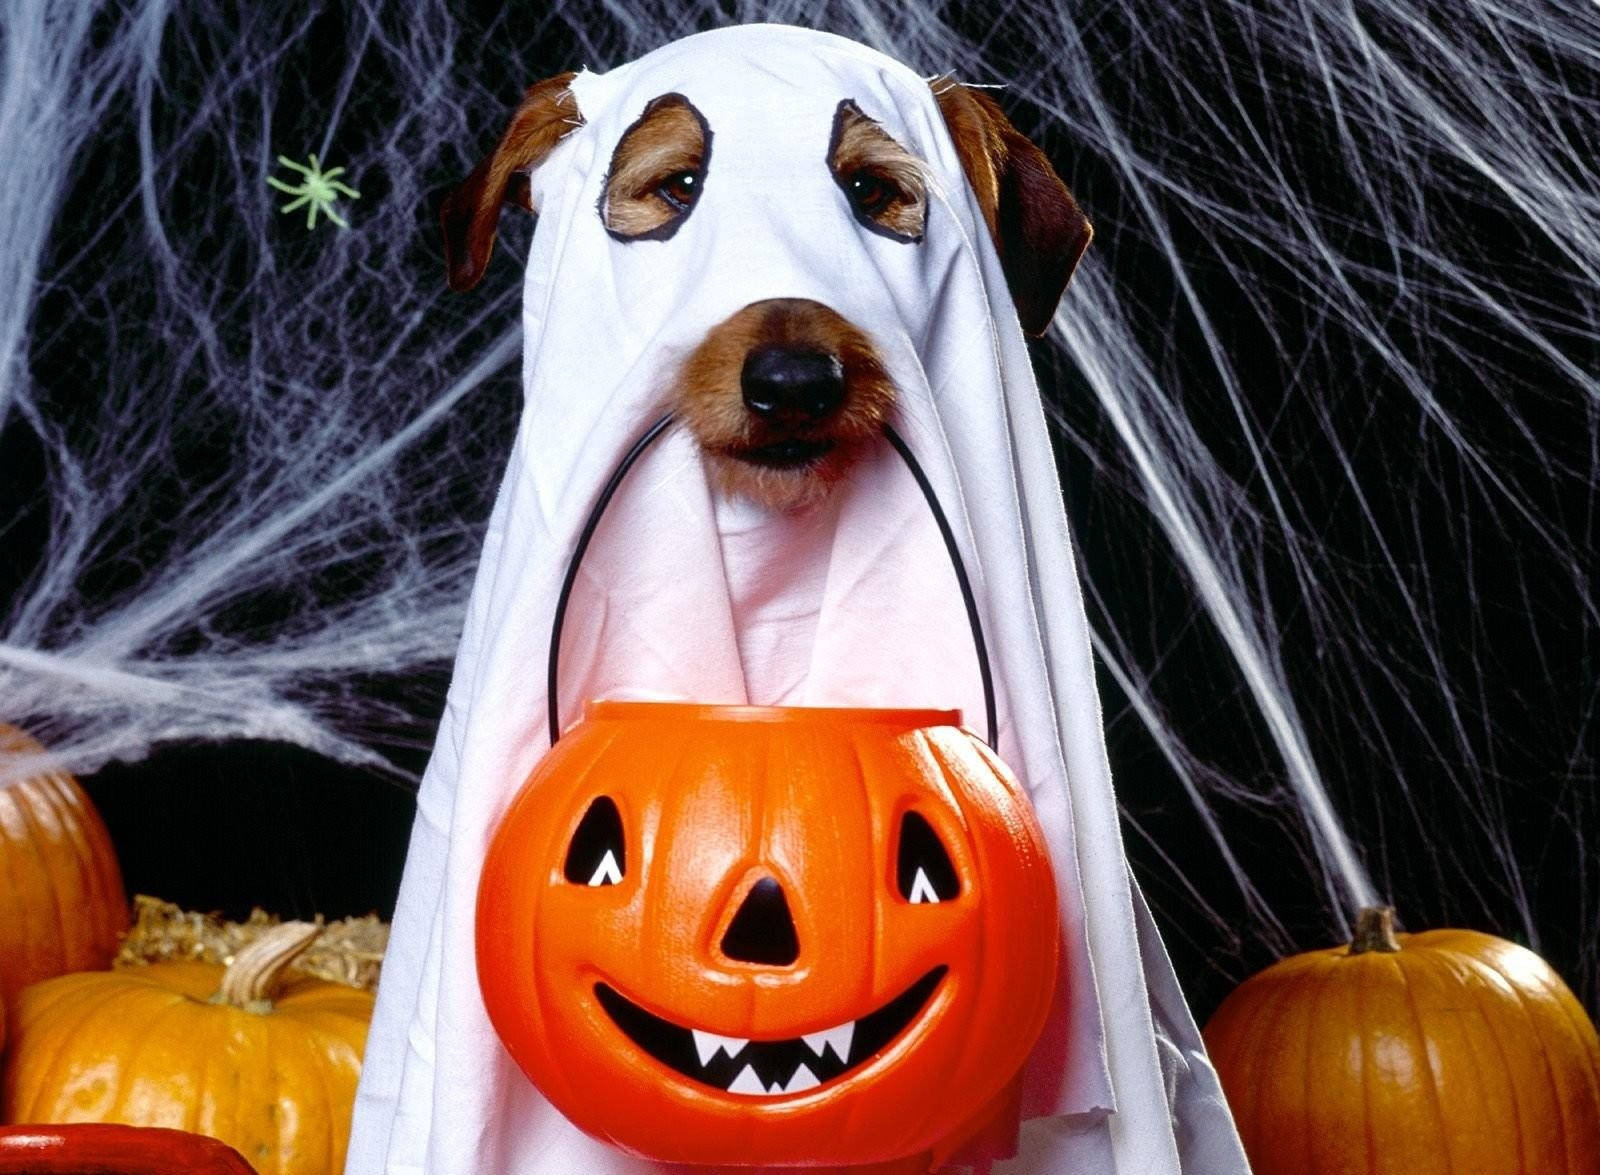 Cute Dog In Ghost Halloween Costume